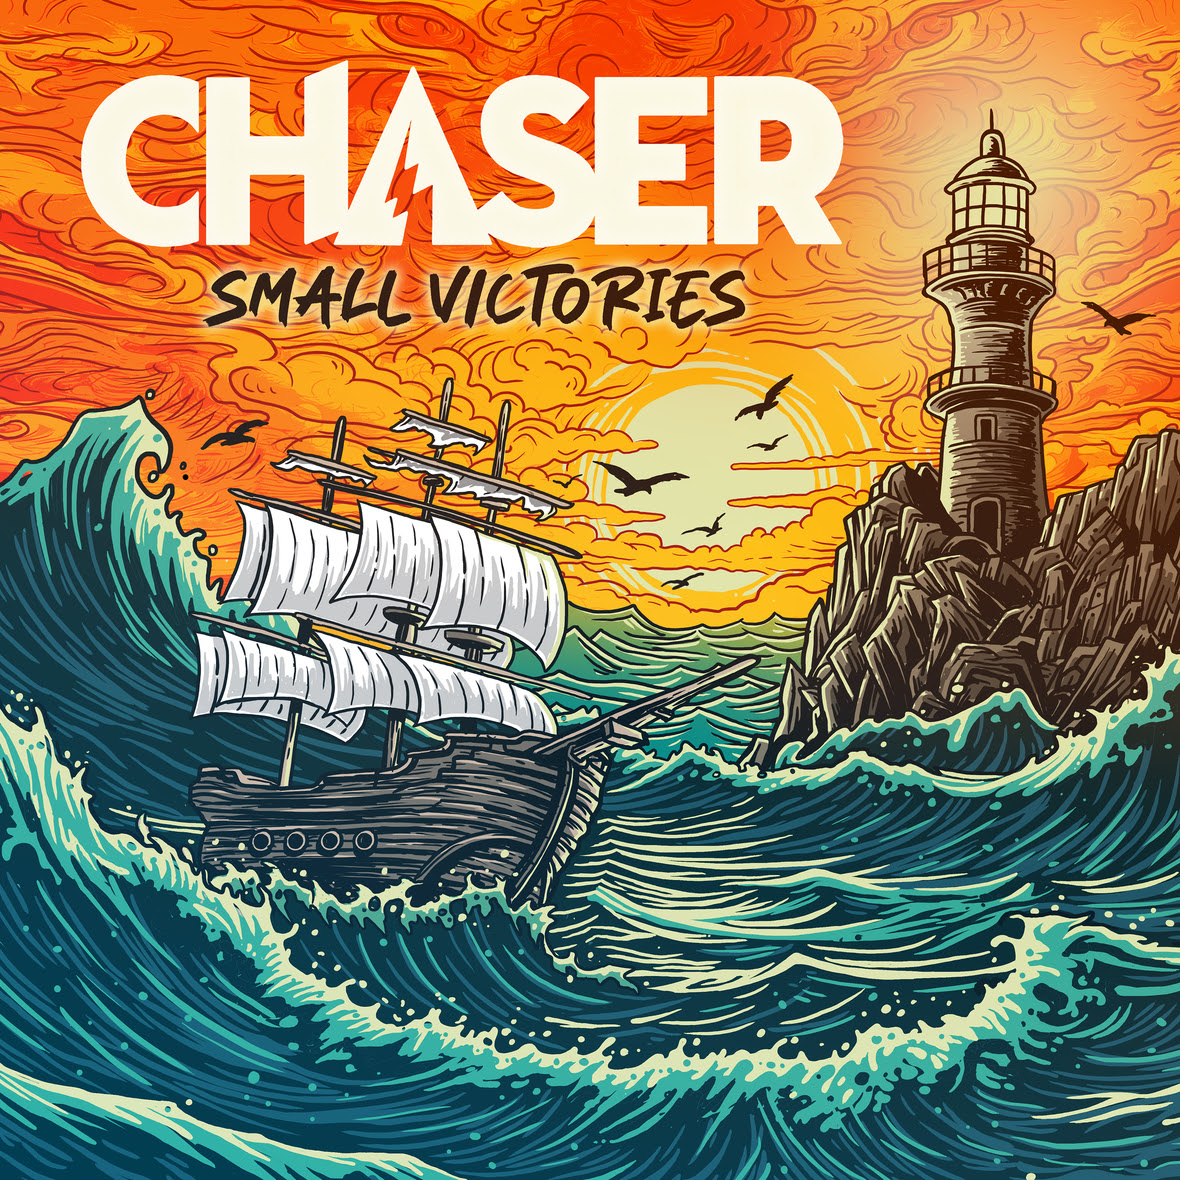 Small Victories - Album Cover